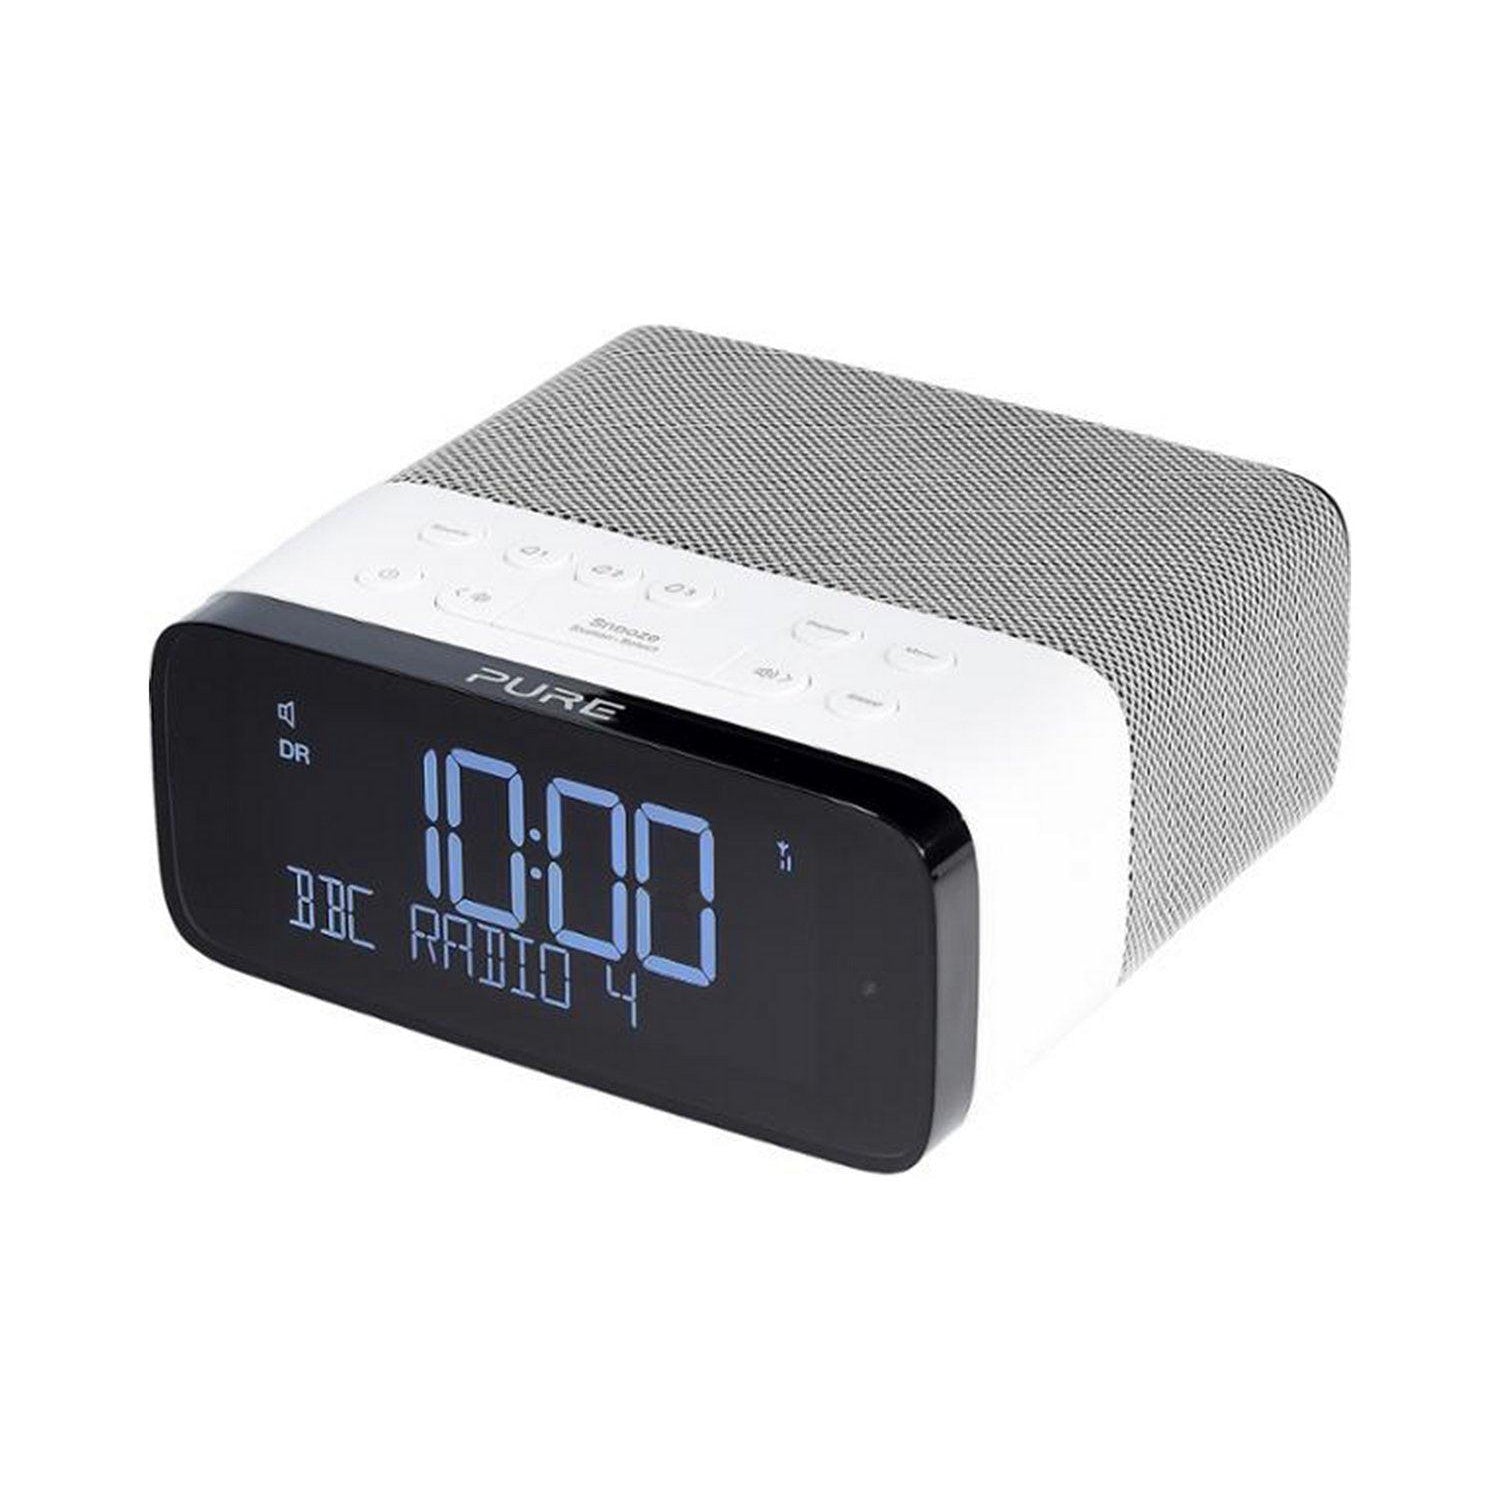 Pure Siesta Rise DAB+/FM Bedside Alarm Clock, White - Refurbished Excellent